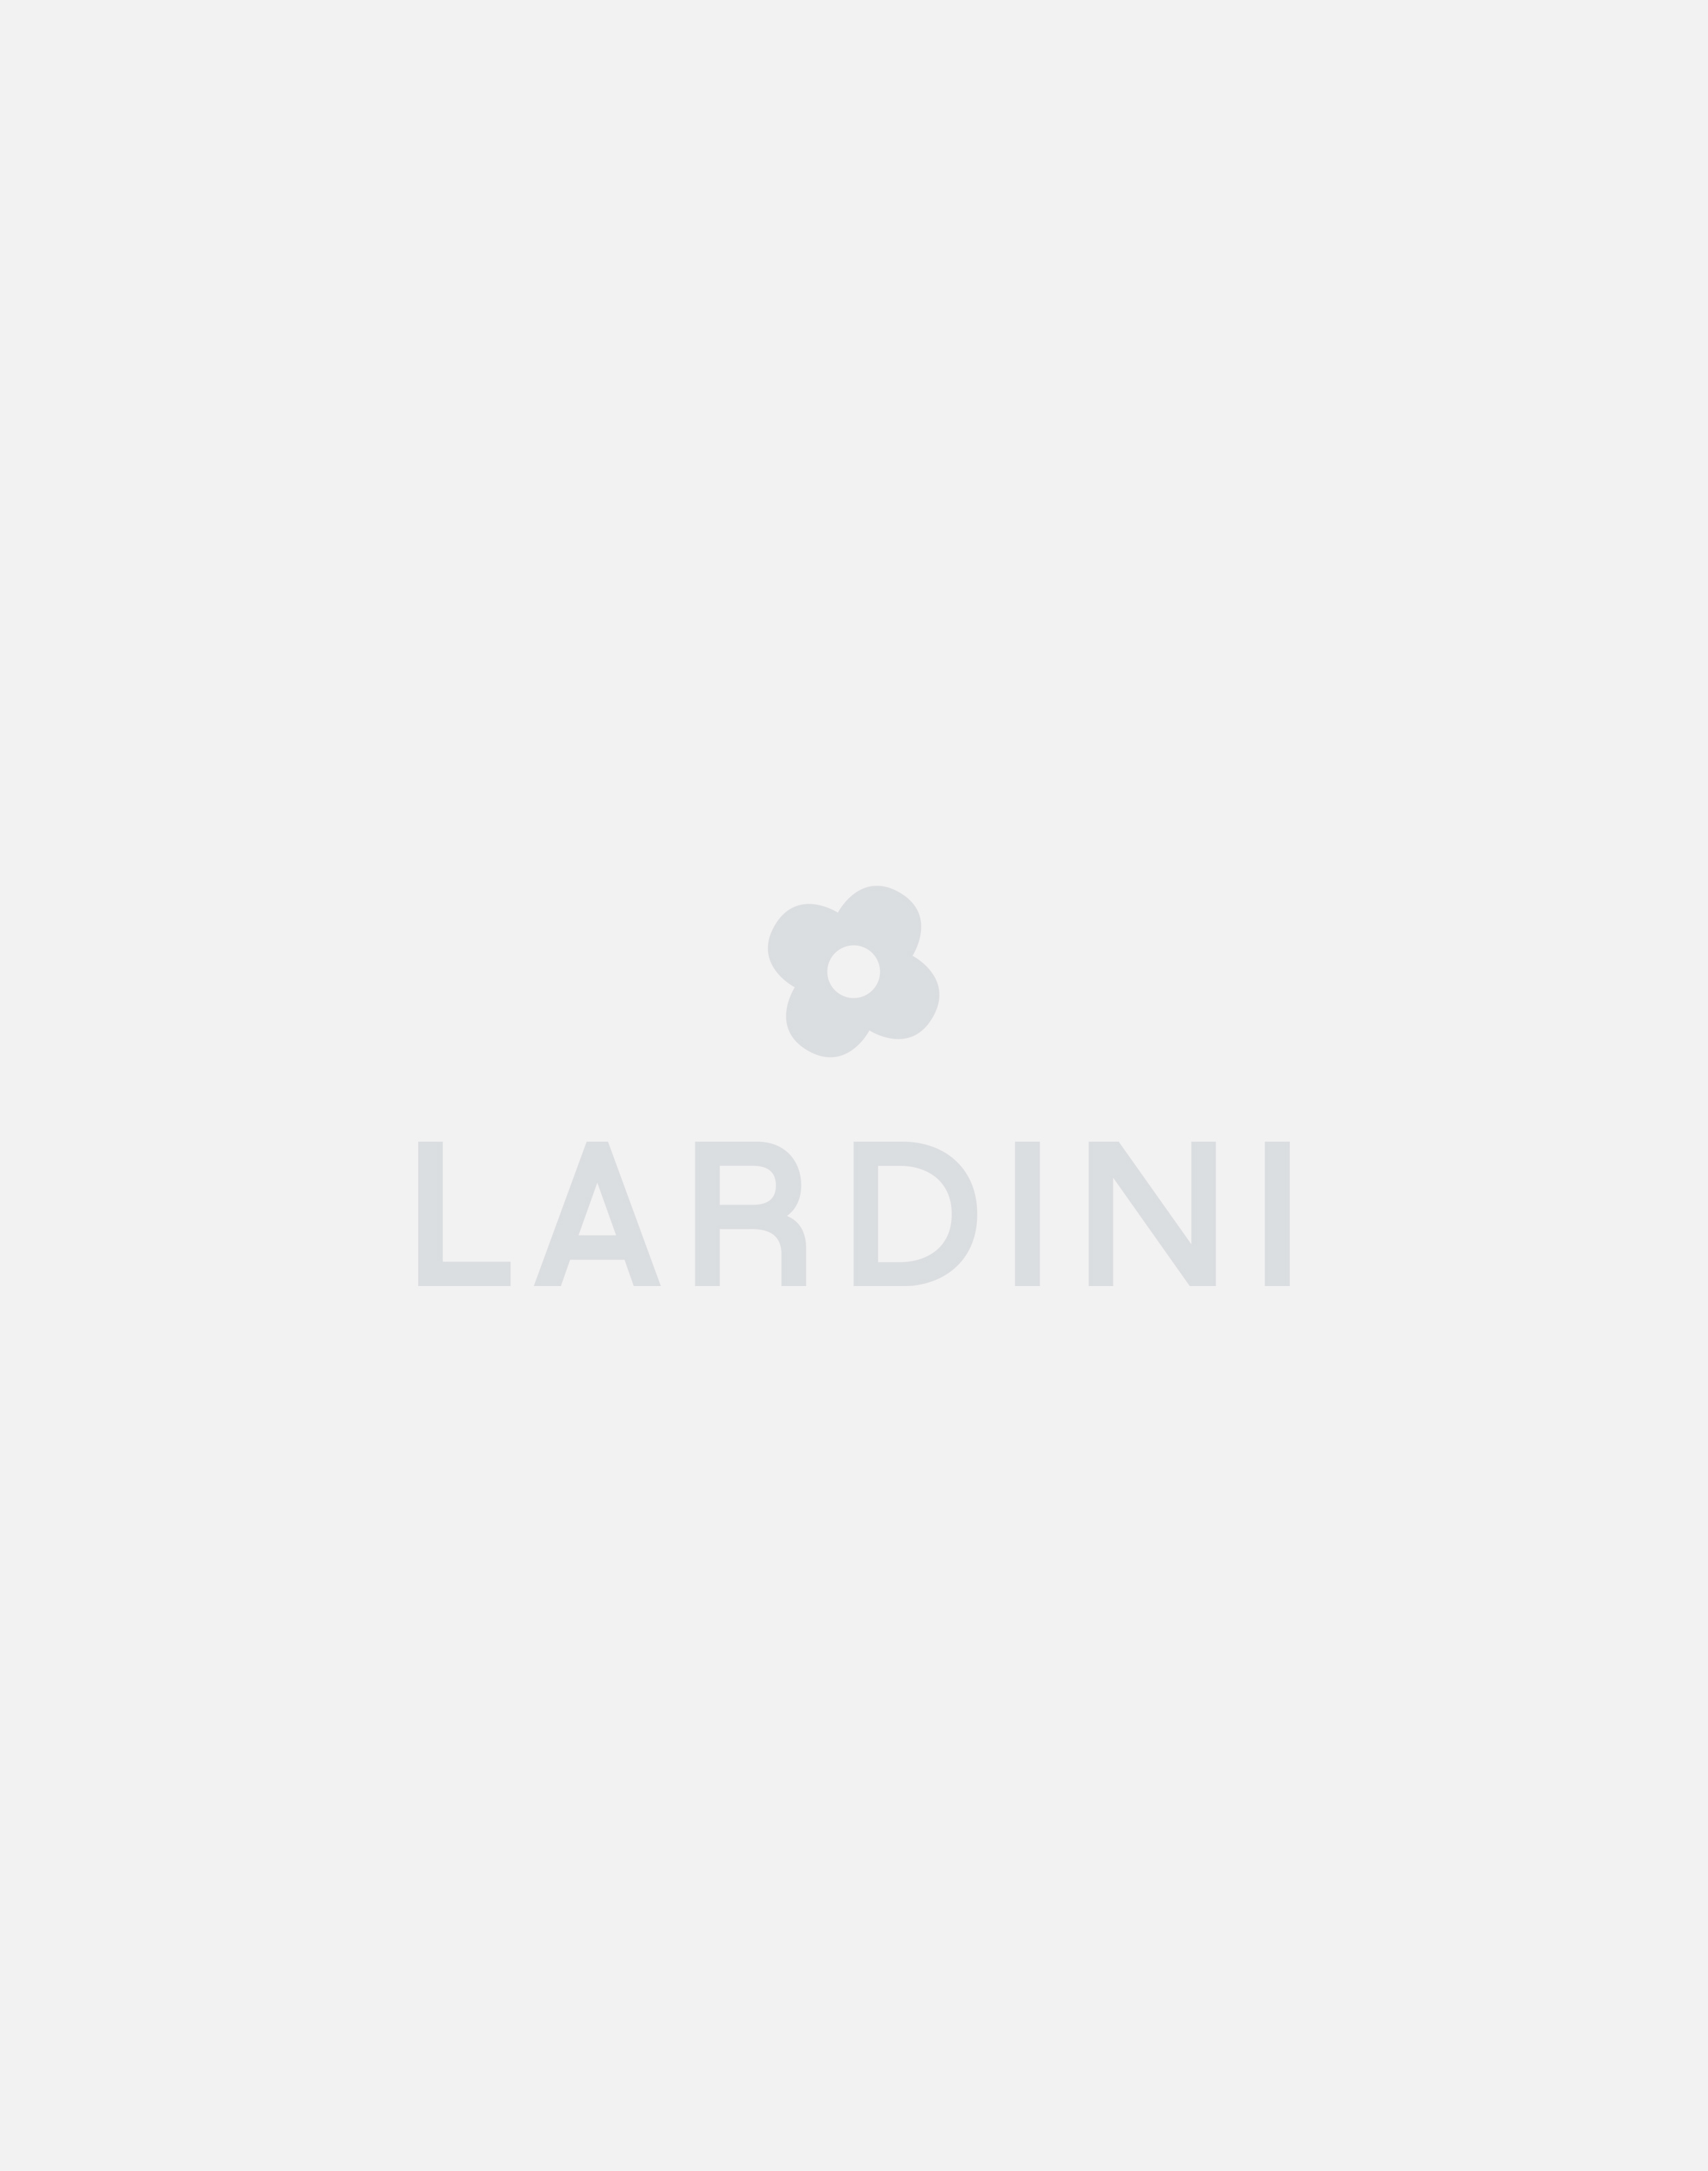 White compact cotton polo shirt - Luigi Lardini capsule